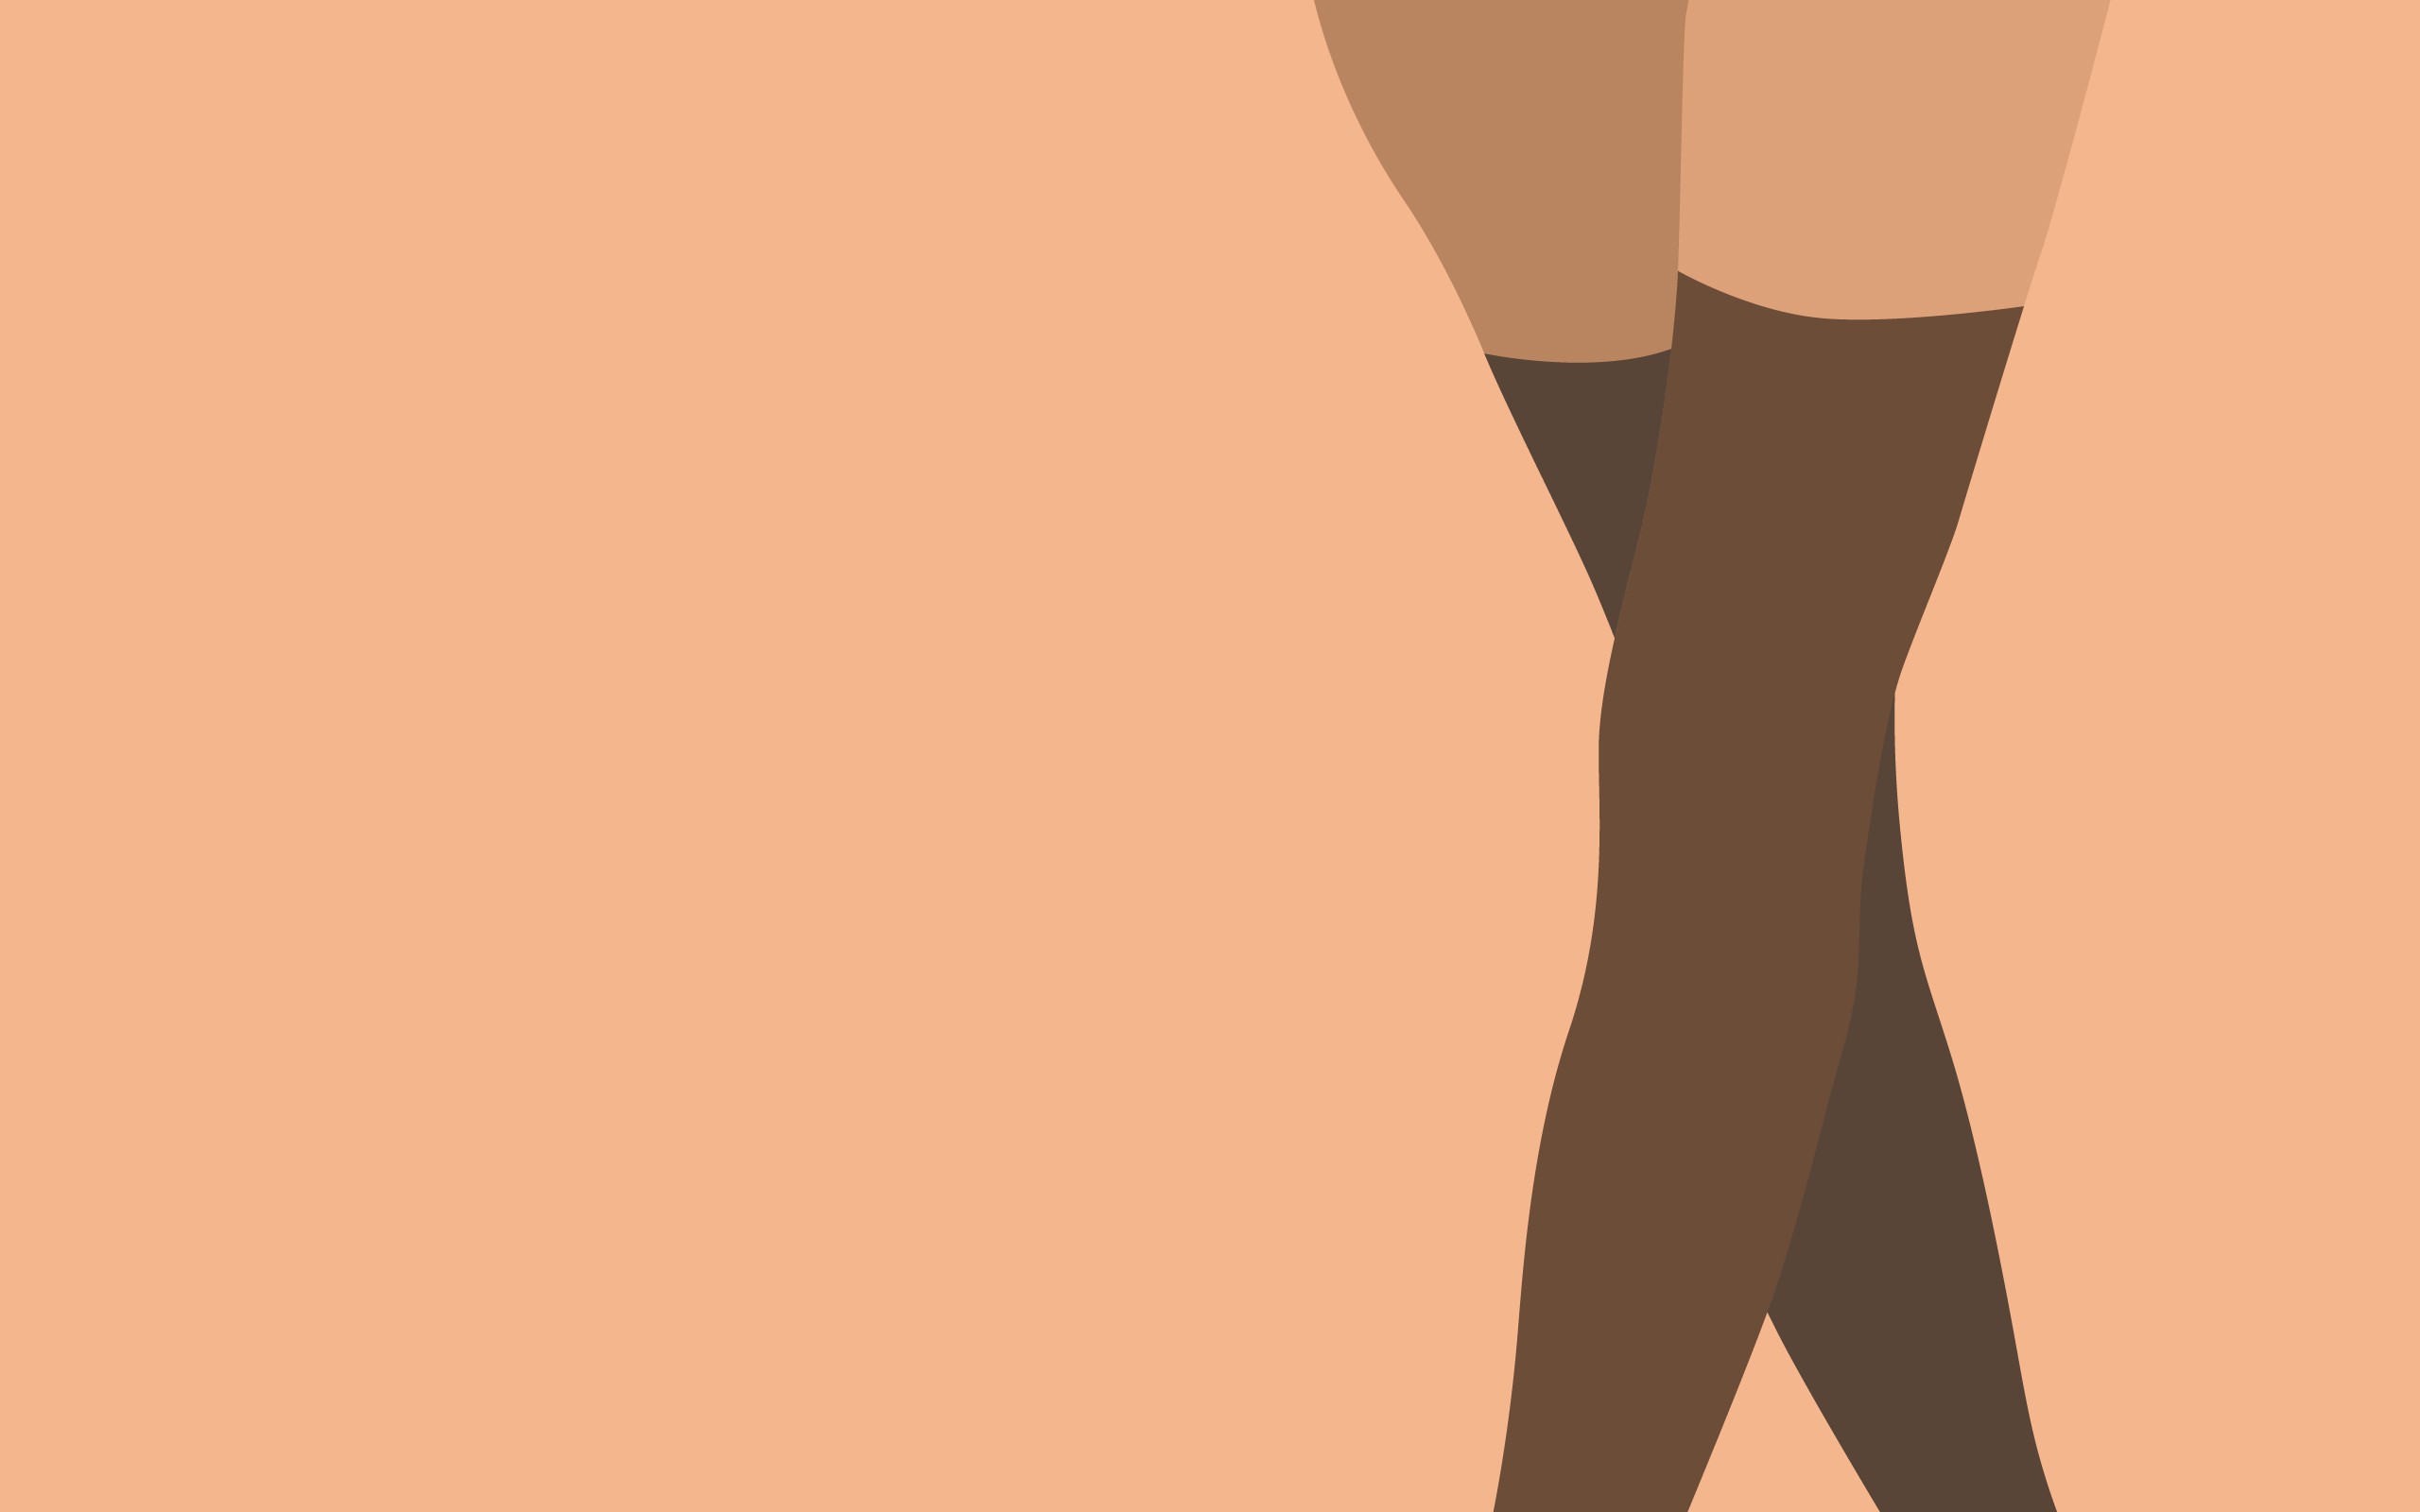 General 2560x1600 legs minimalism women artwork simple background stockings